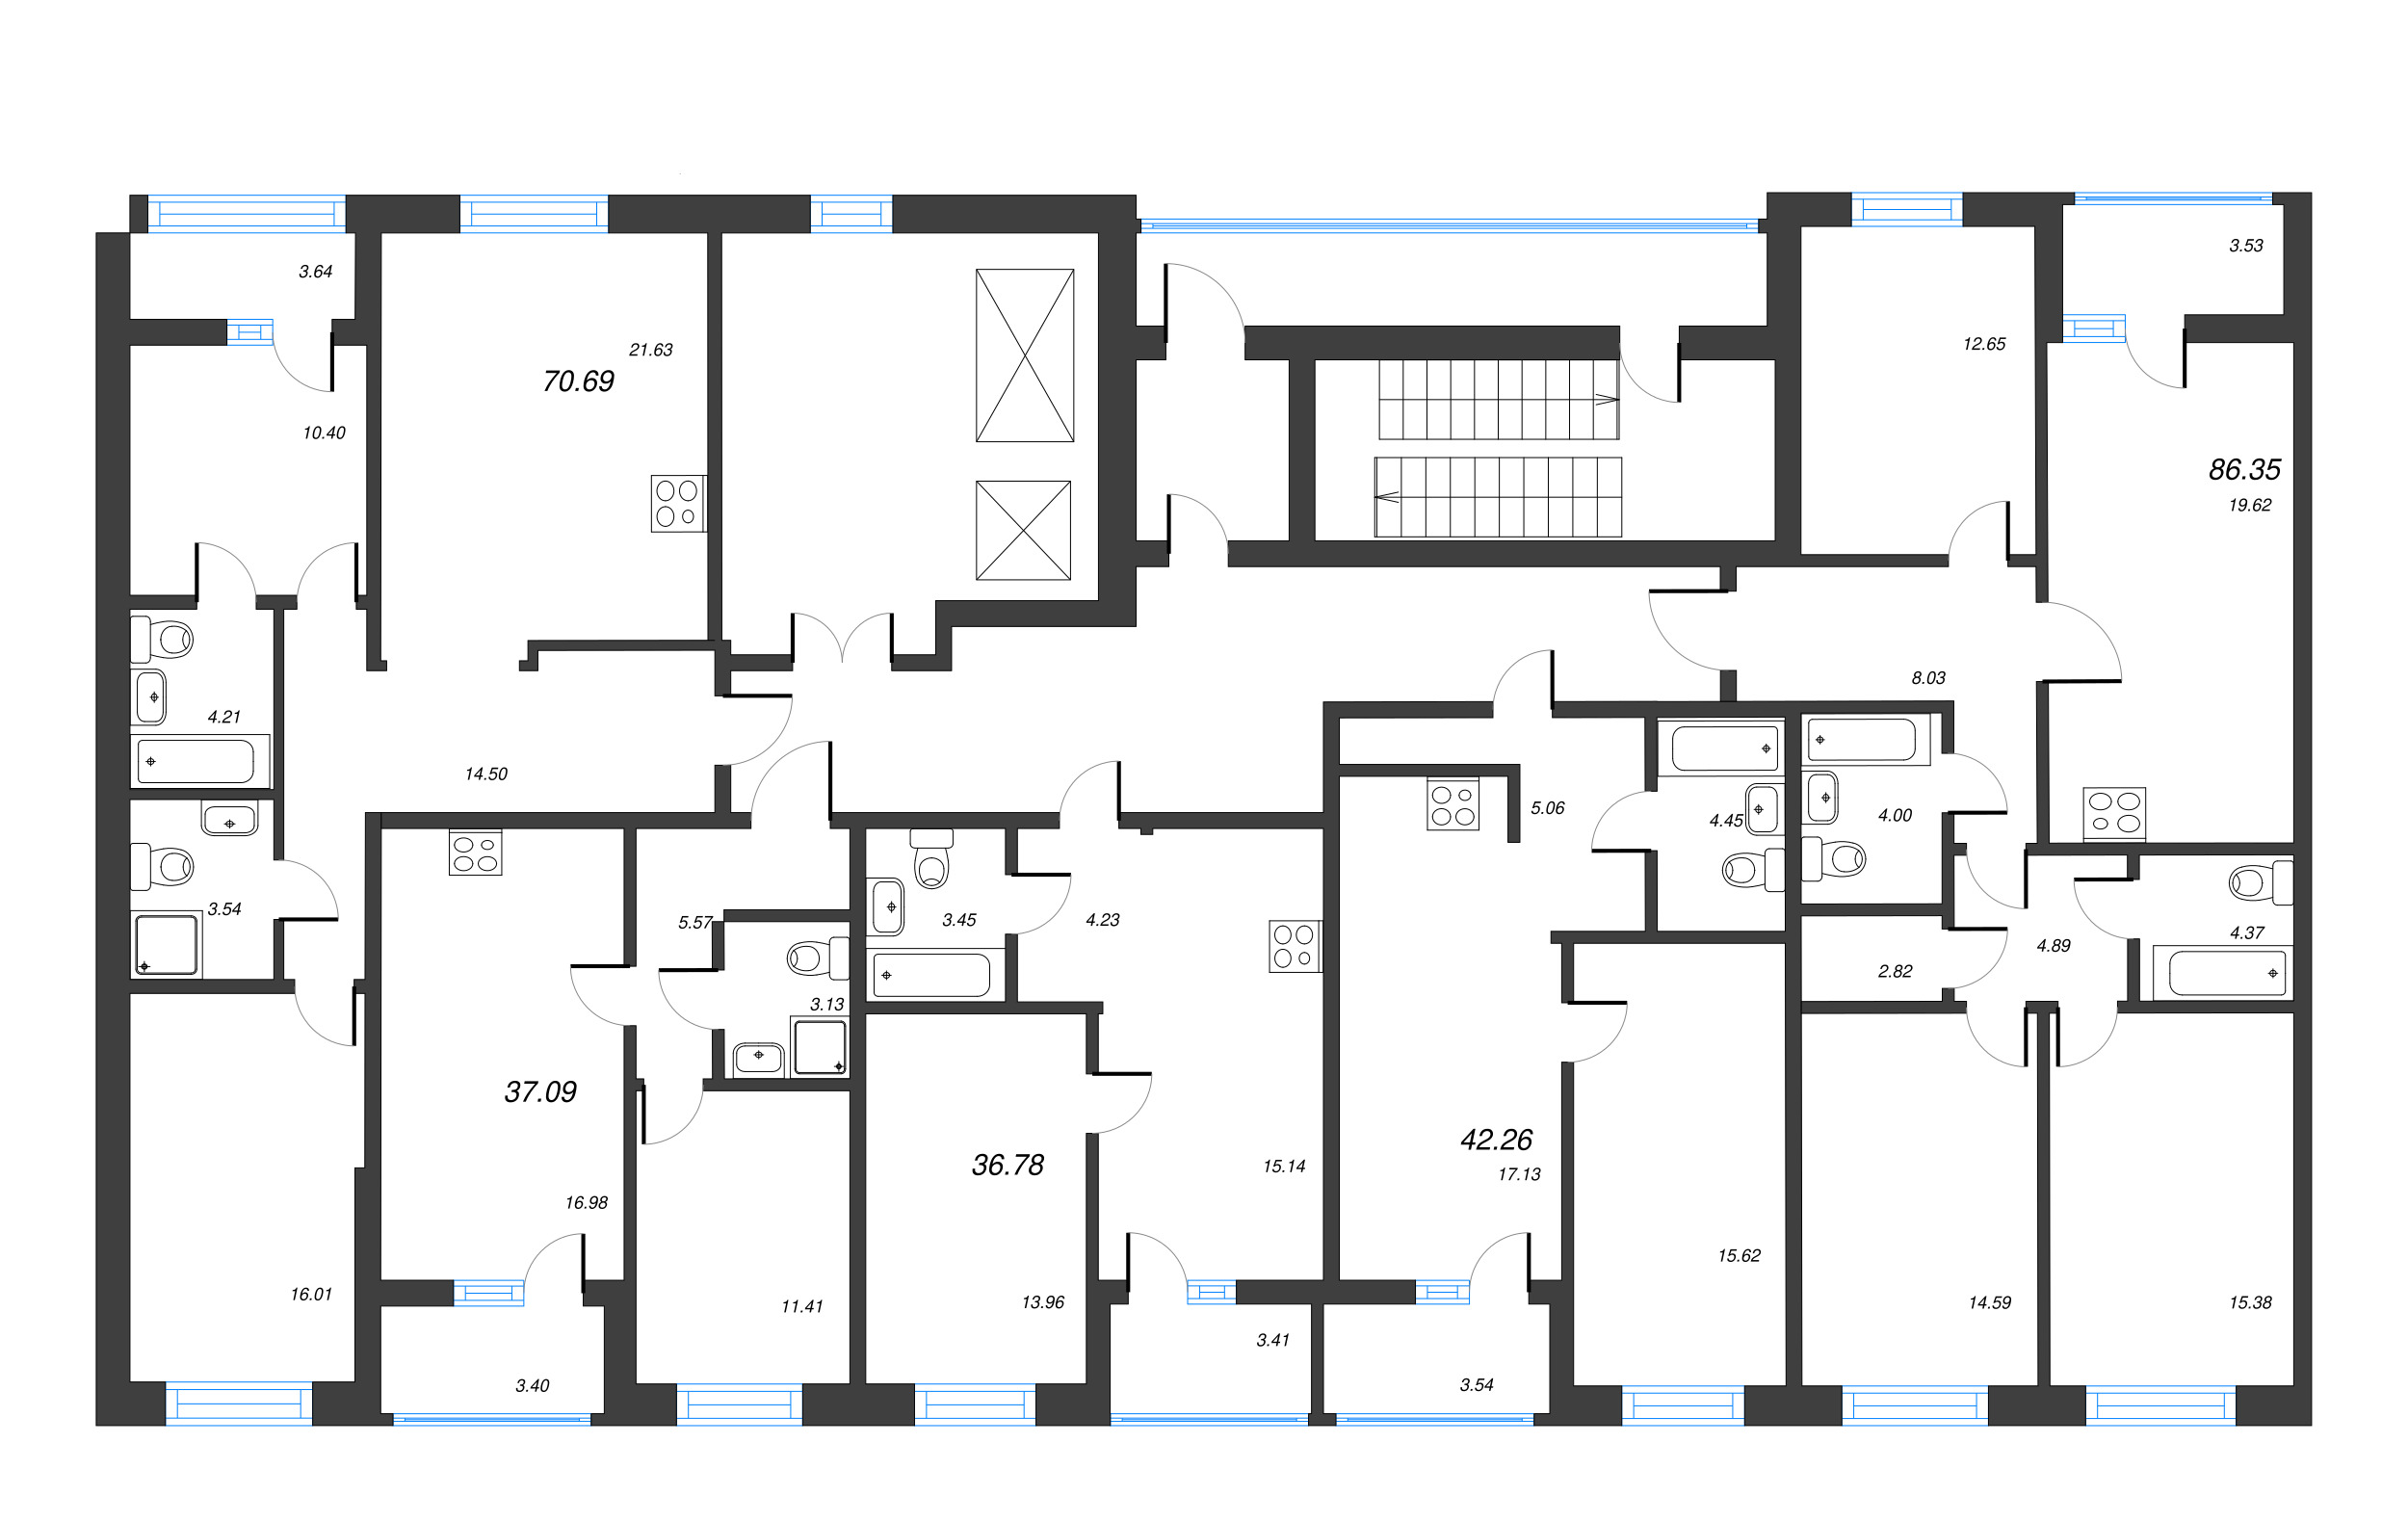 4-комнатная (Евро) квартира, 86.35 м² - планировка этажа